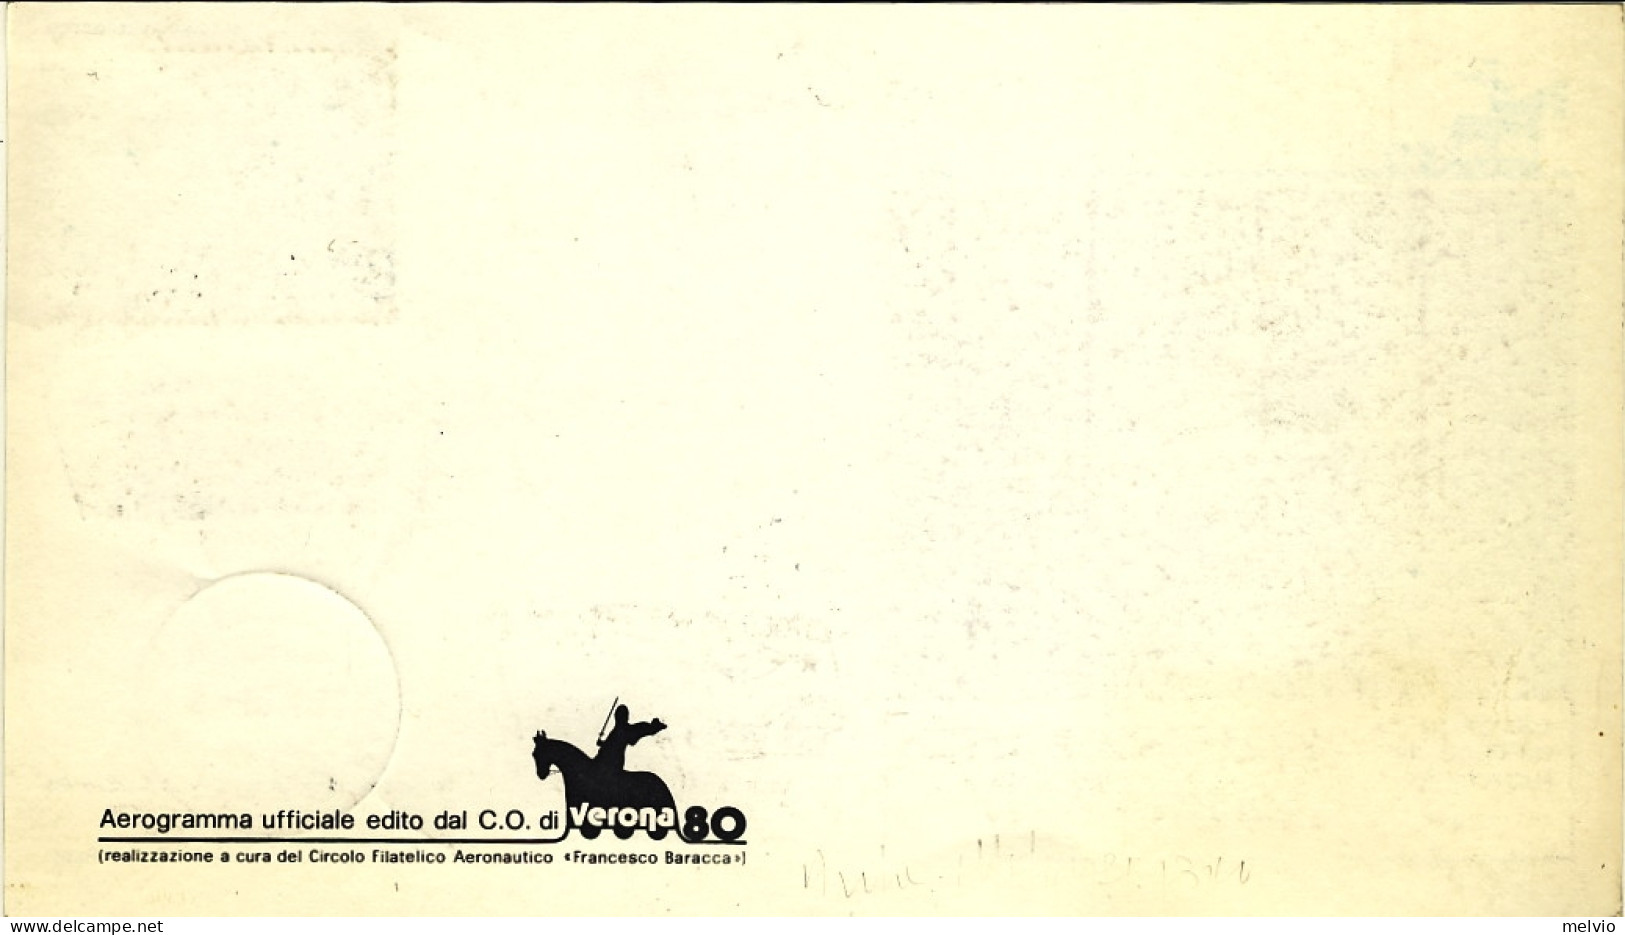 1981-cartolina Verona 80 Posta Aerea Supersonica Villafranca-Ramstein - 1981-90: Storia Postale